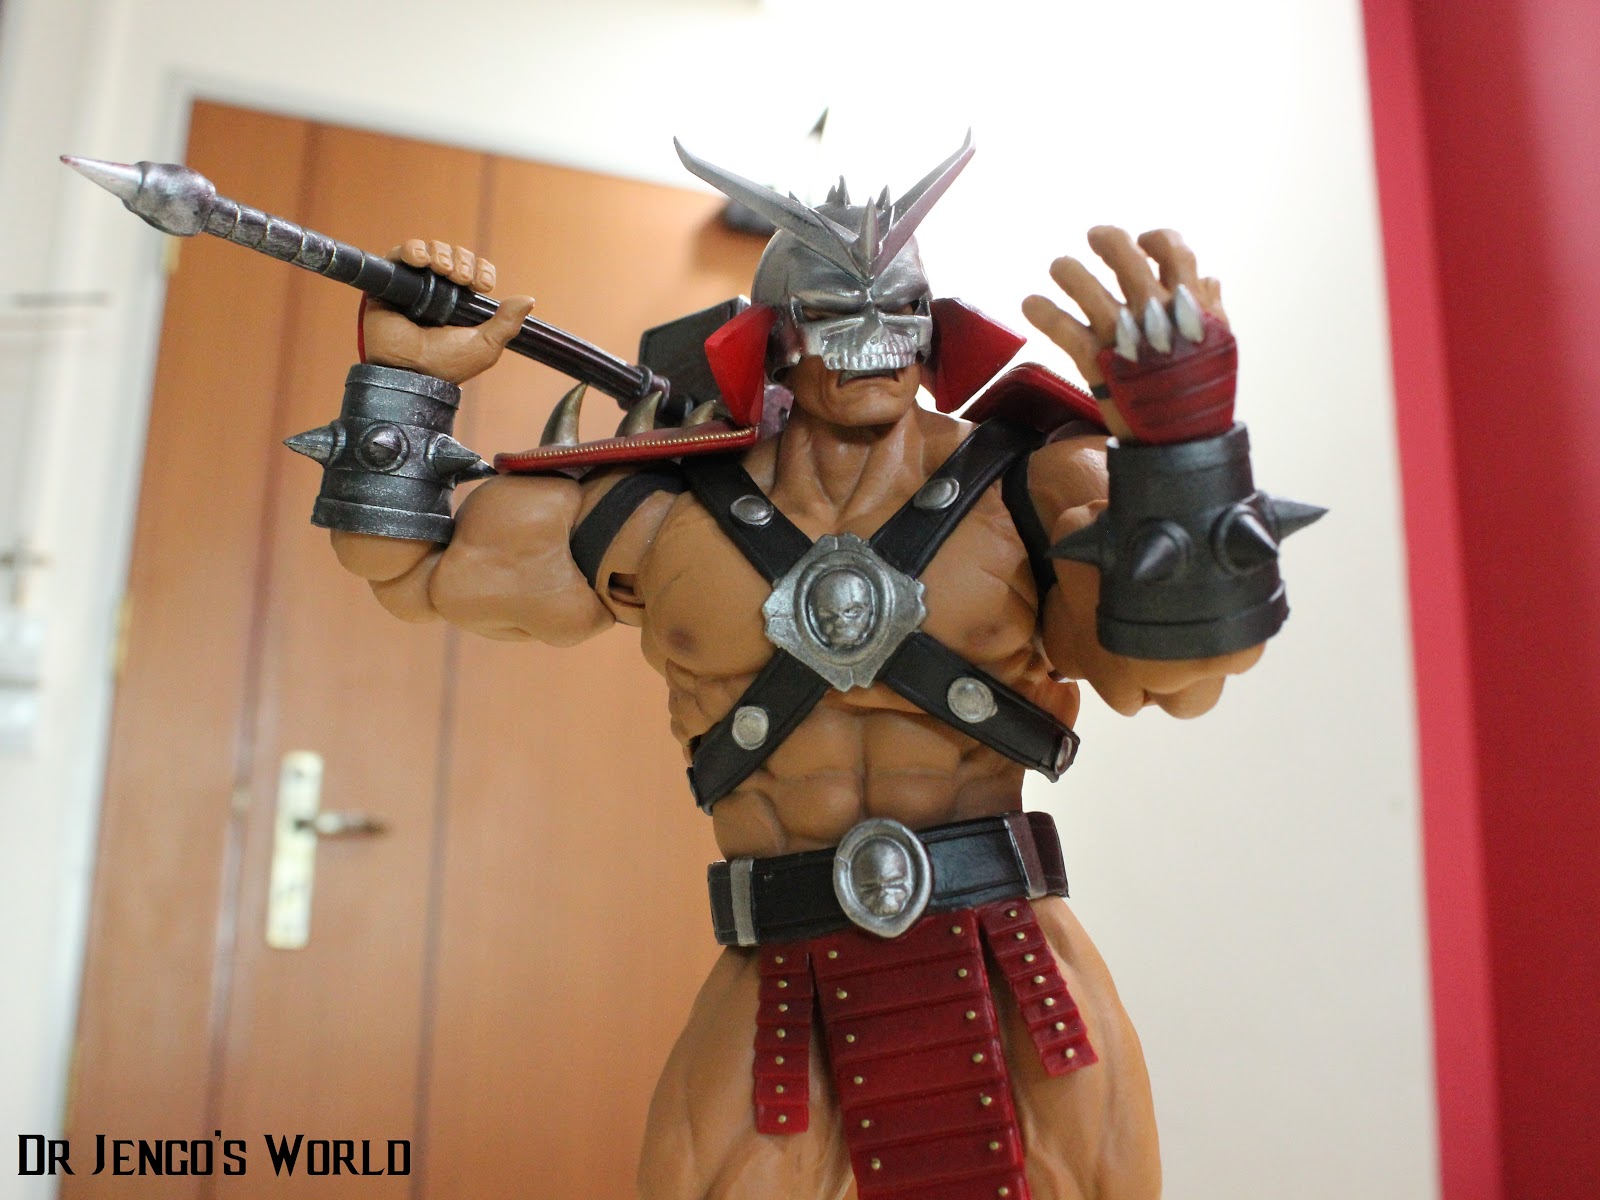 Storm Toys Mortal Kombat Shao Kahn Action Figure Model Throne 1/12